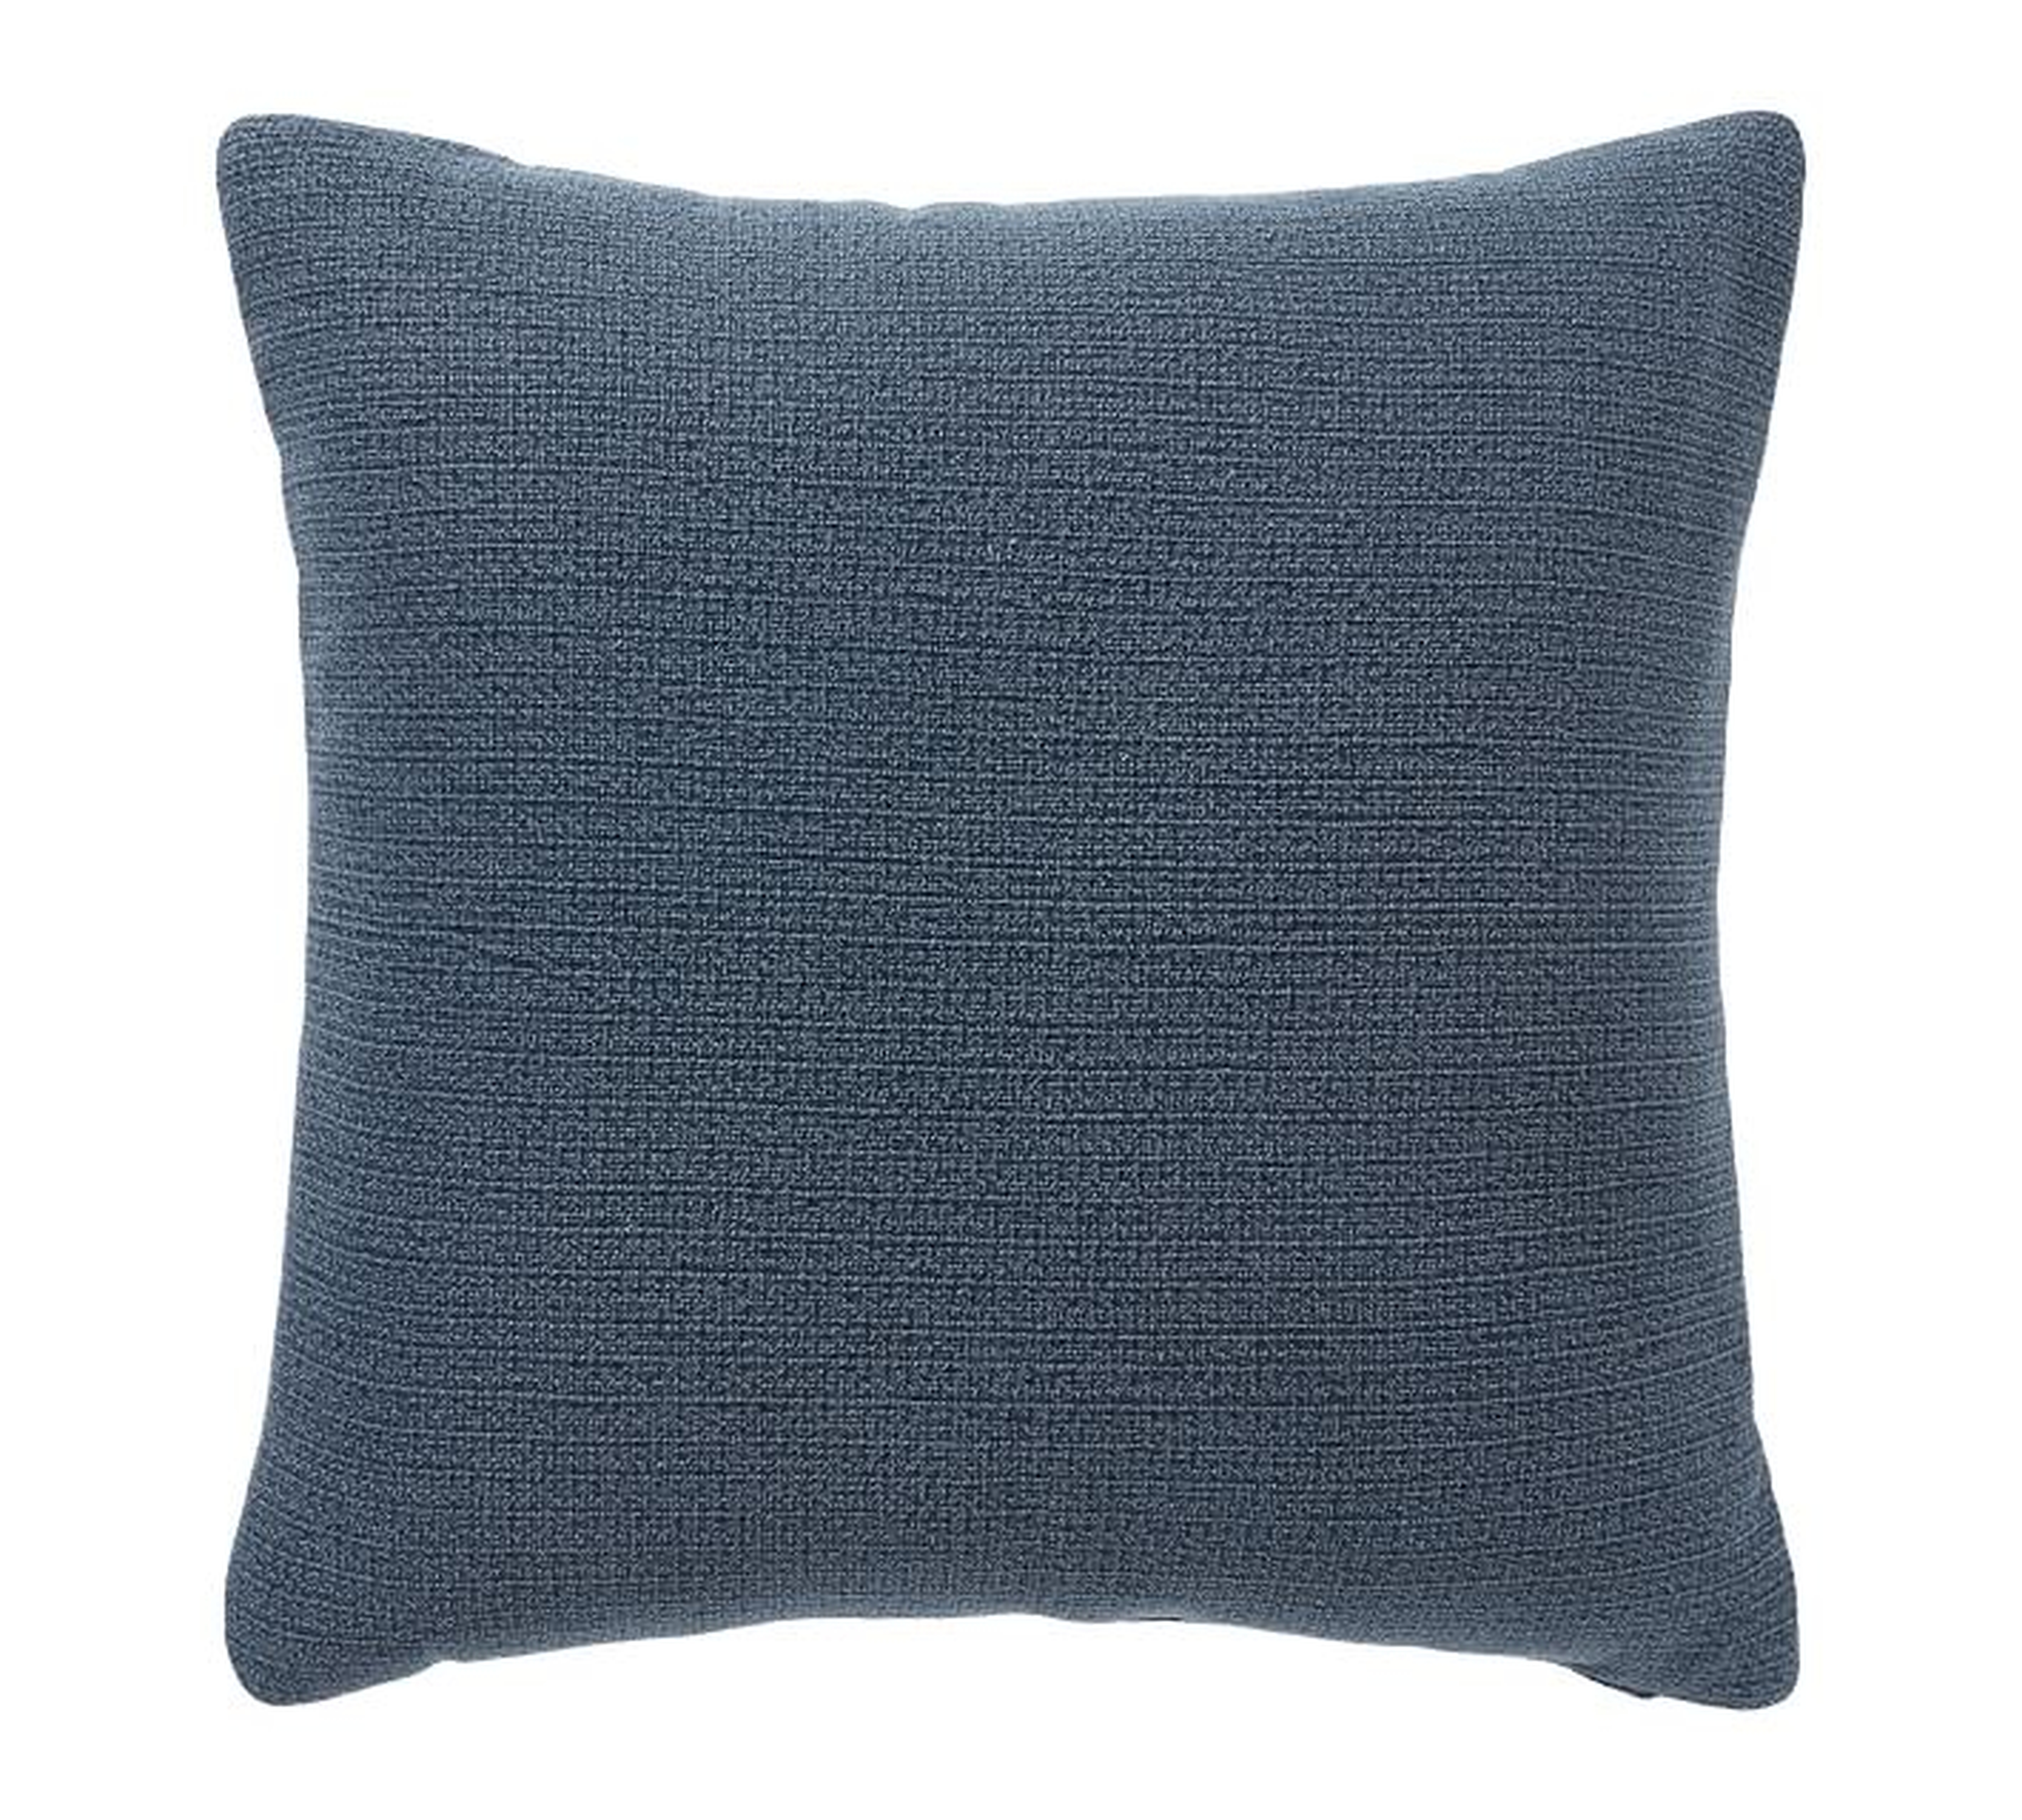 Stonewashed Slub Cotton Pillow - Midnight / Polyester fill - Pottery Barn